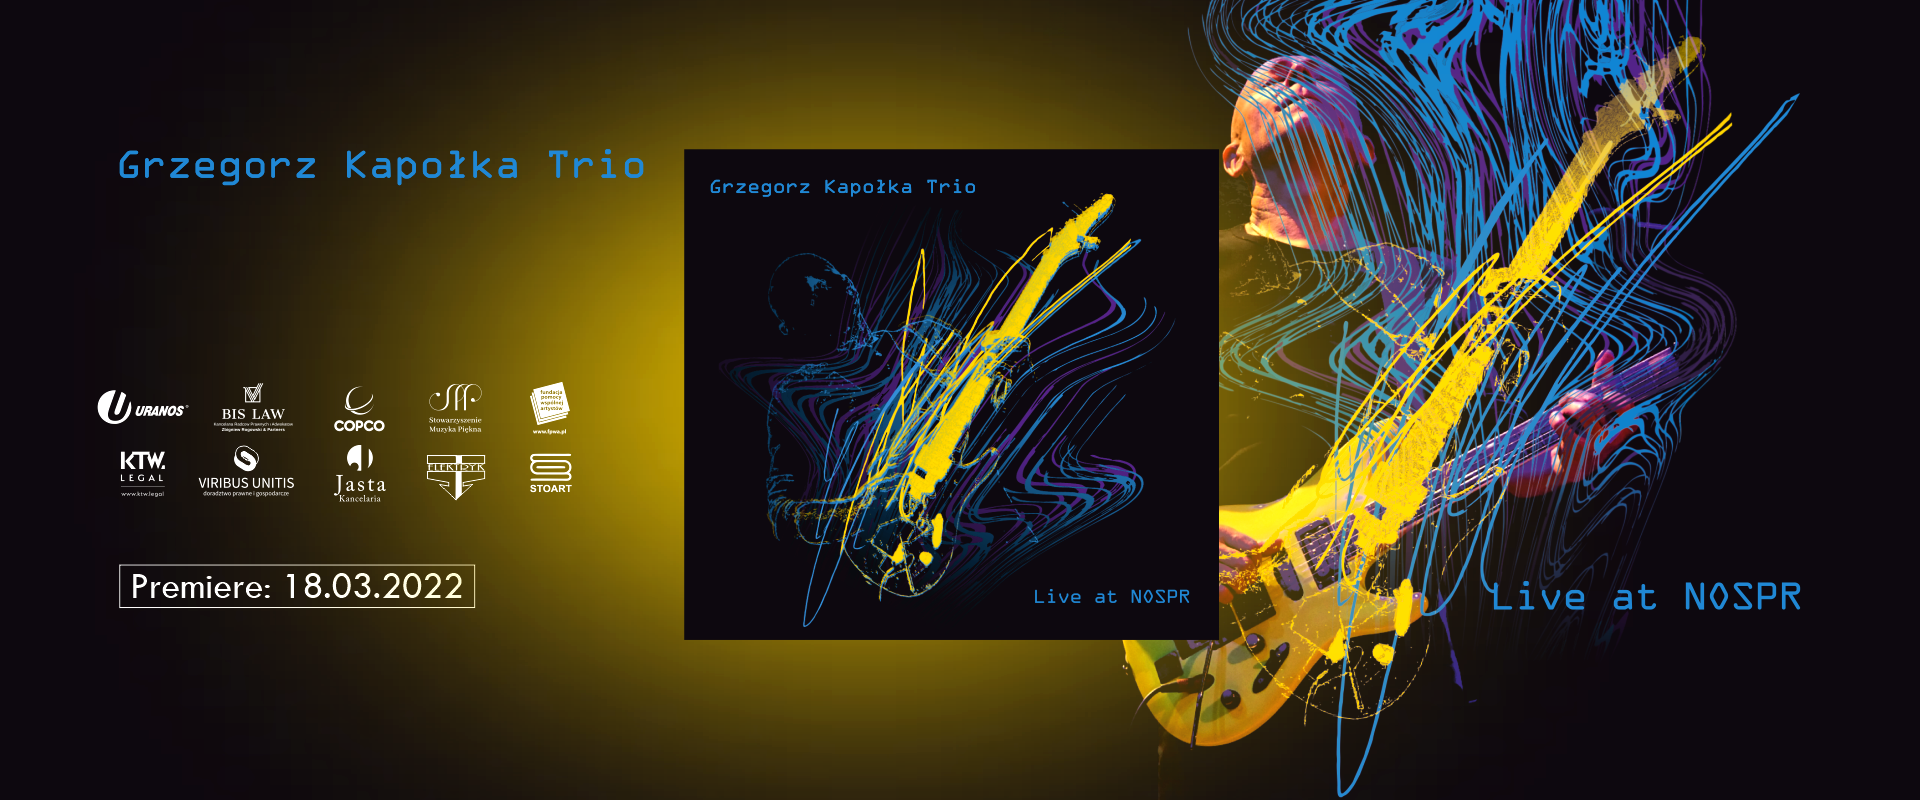 Grzegorz Kapołka Trio - Live at NOSPR alt